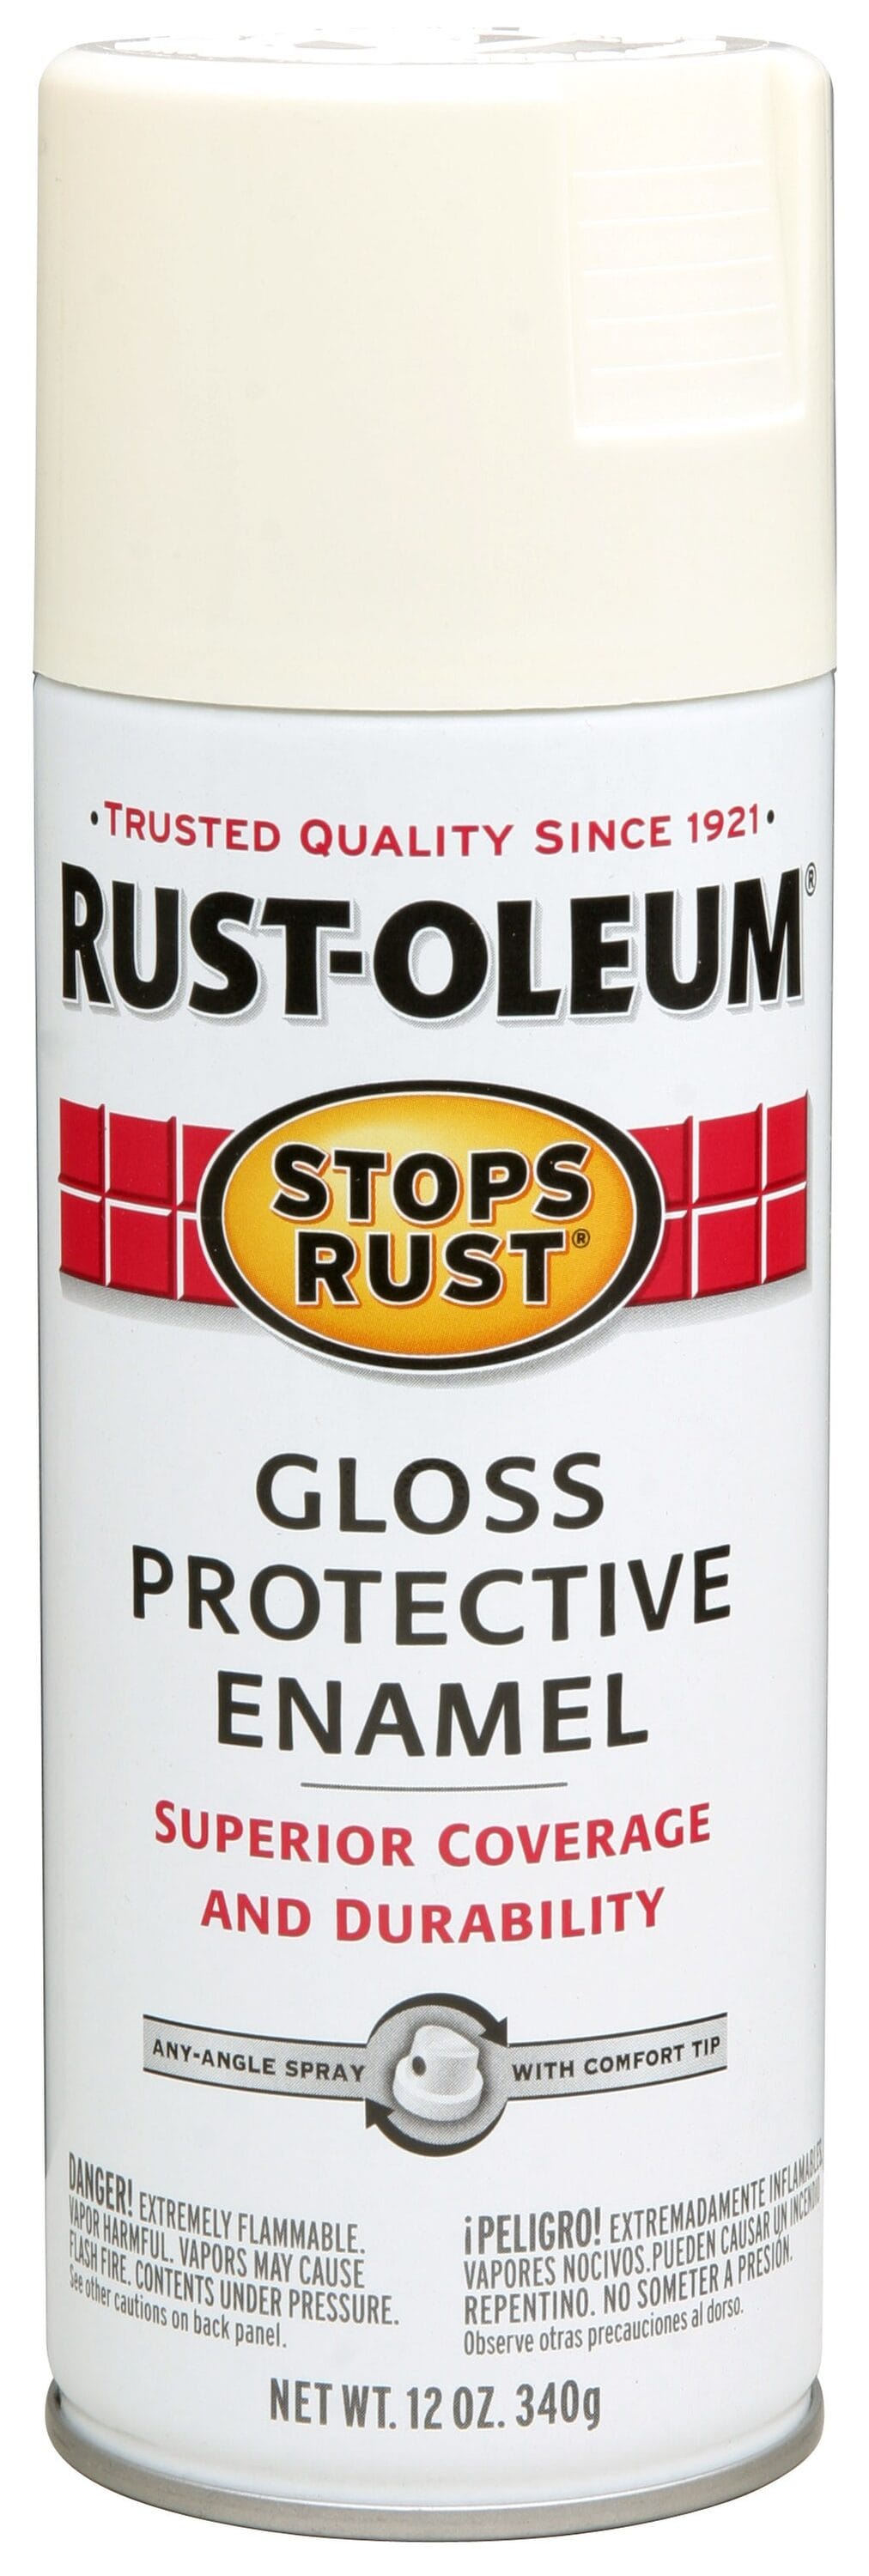 Rust-Oleum Stops Rust Hammered Paint, Copper, 1 Qt. - Town